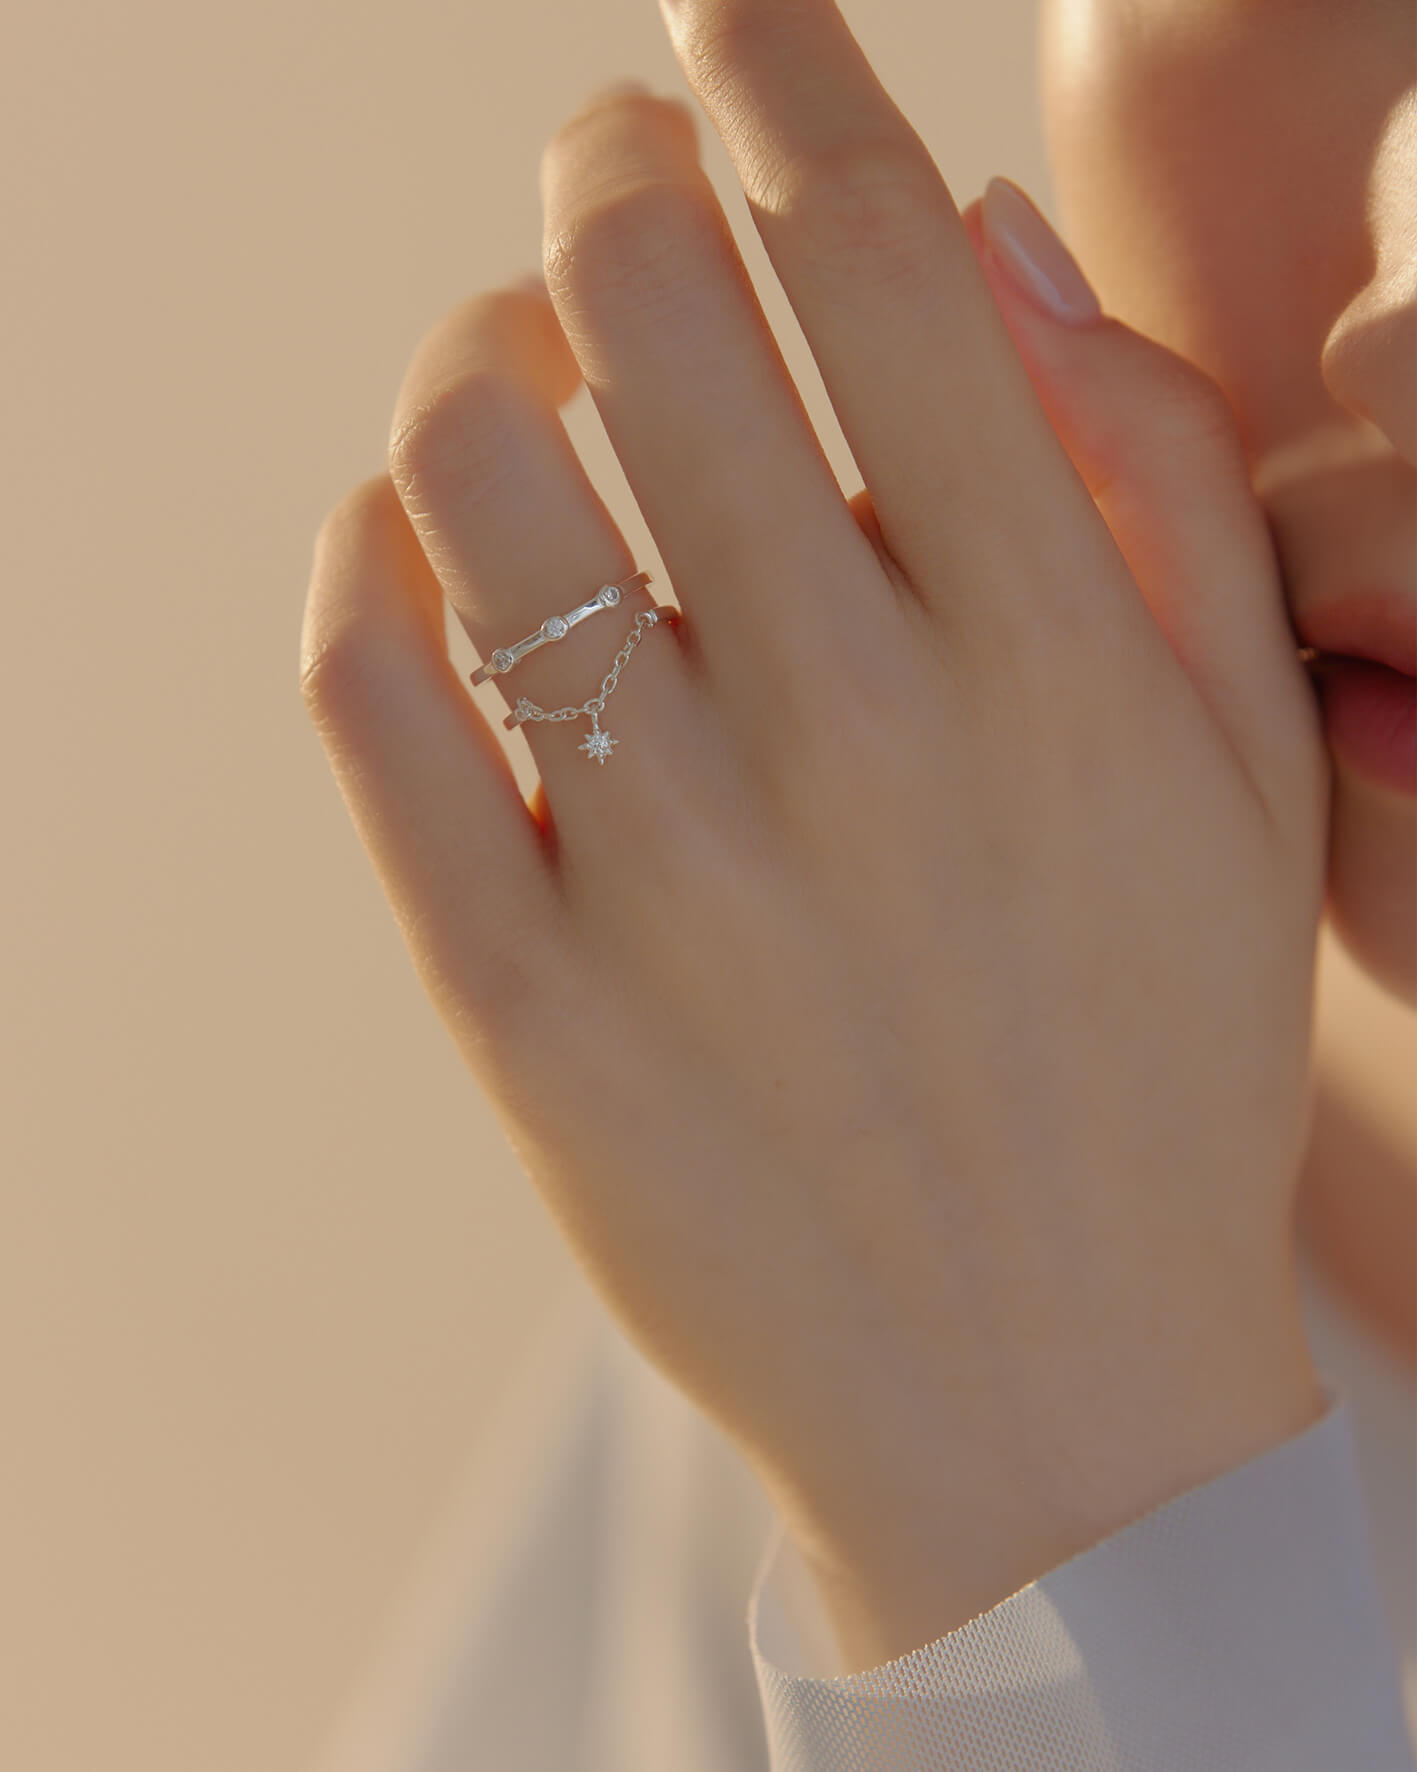 Eco安珂,韓國飾品,韓國戒指,韓國925純銀戒指,925純銀戒指,純銀戒指,純銀鍊戒